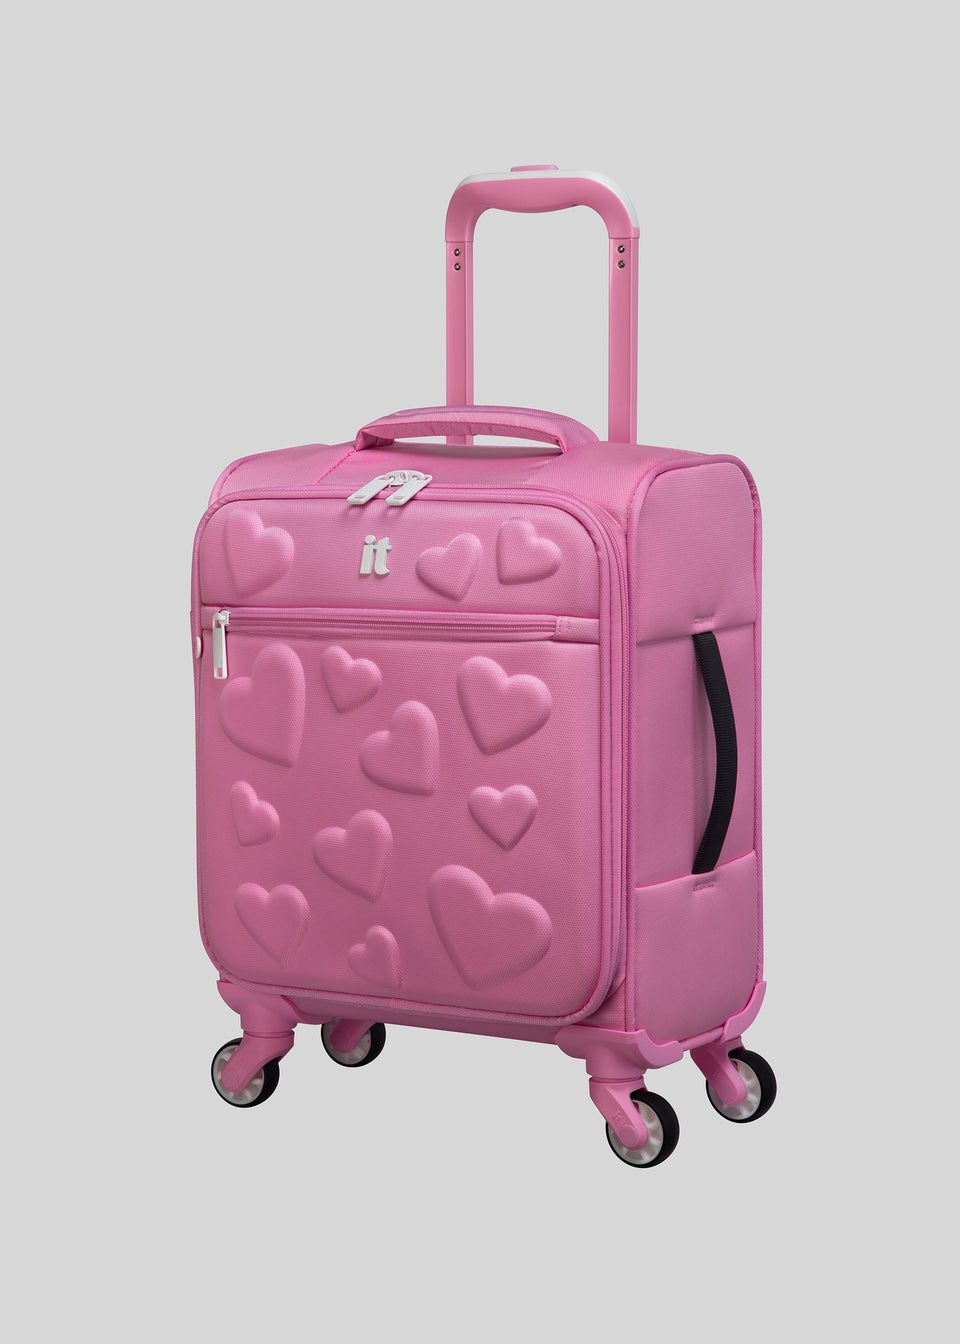 IT Luggage Pink Hearts Suitcase (44.5cm x 33.5cm x 20cm)